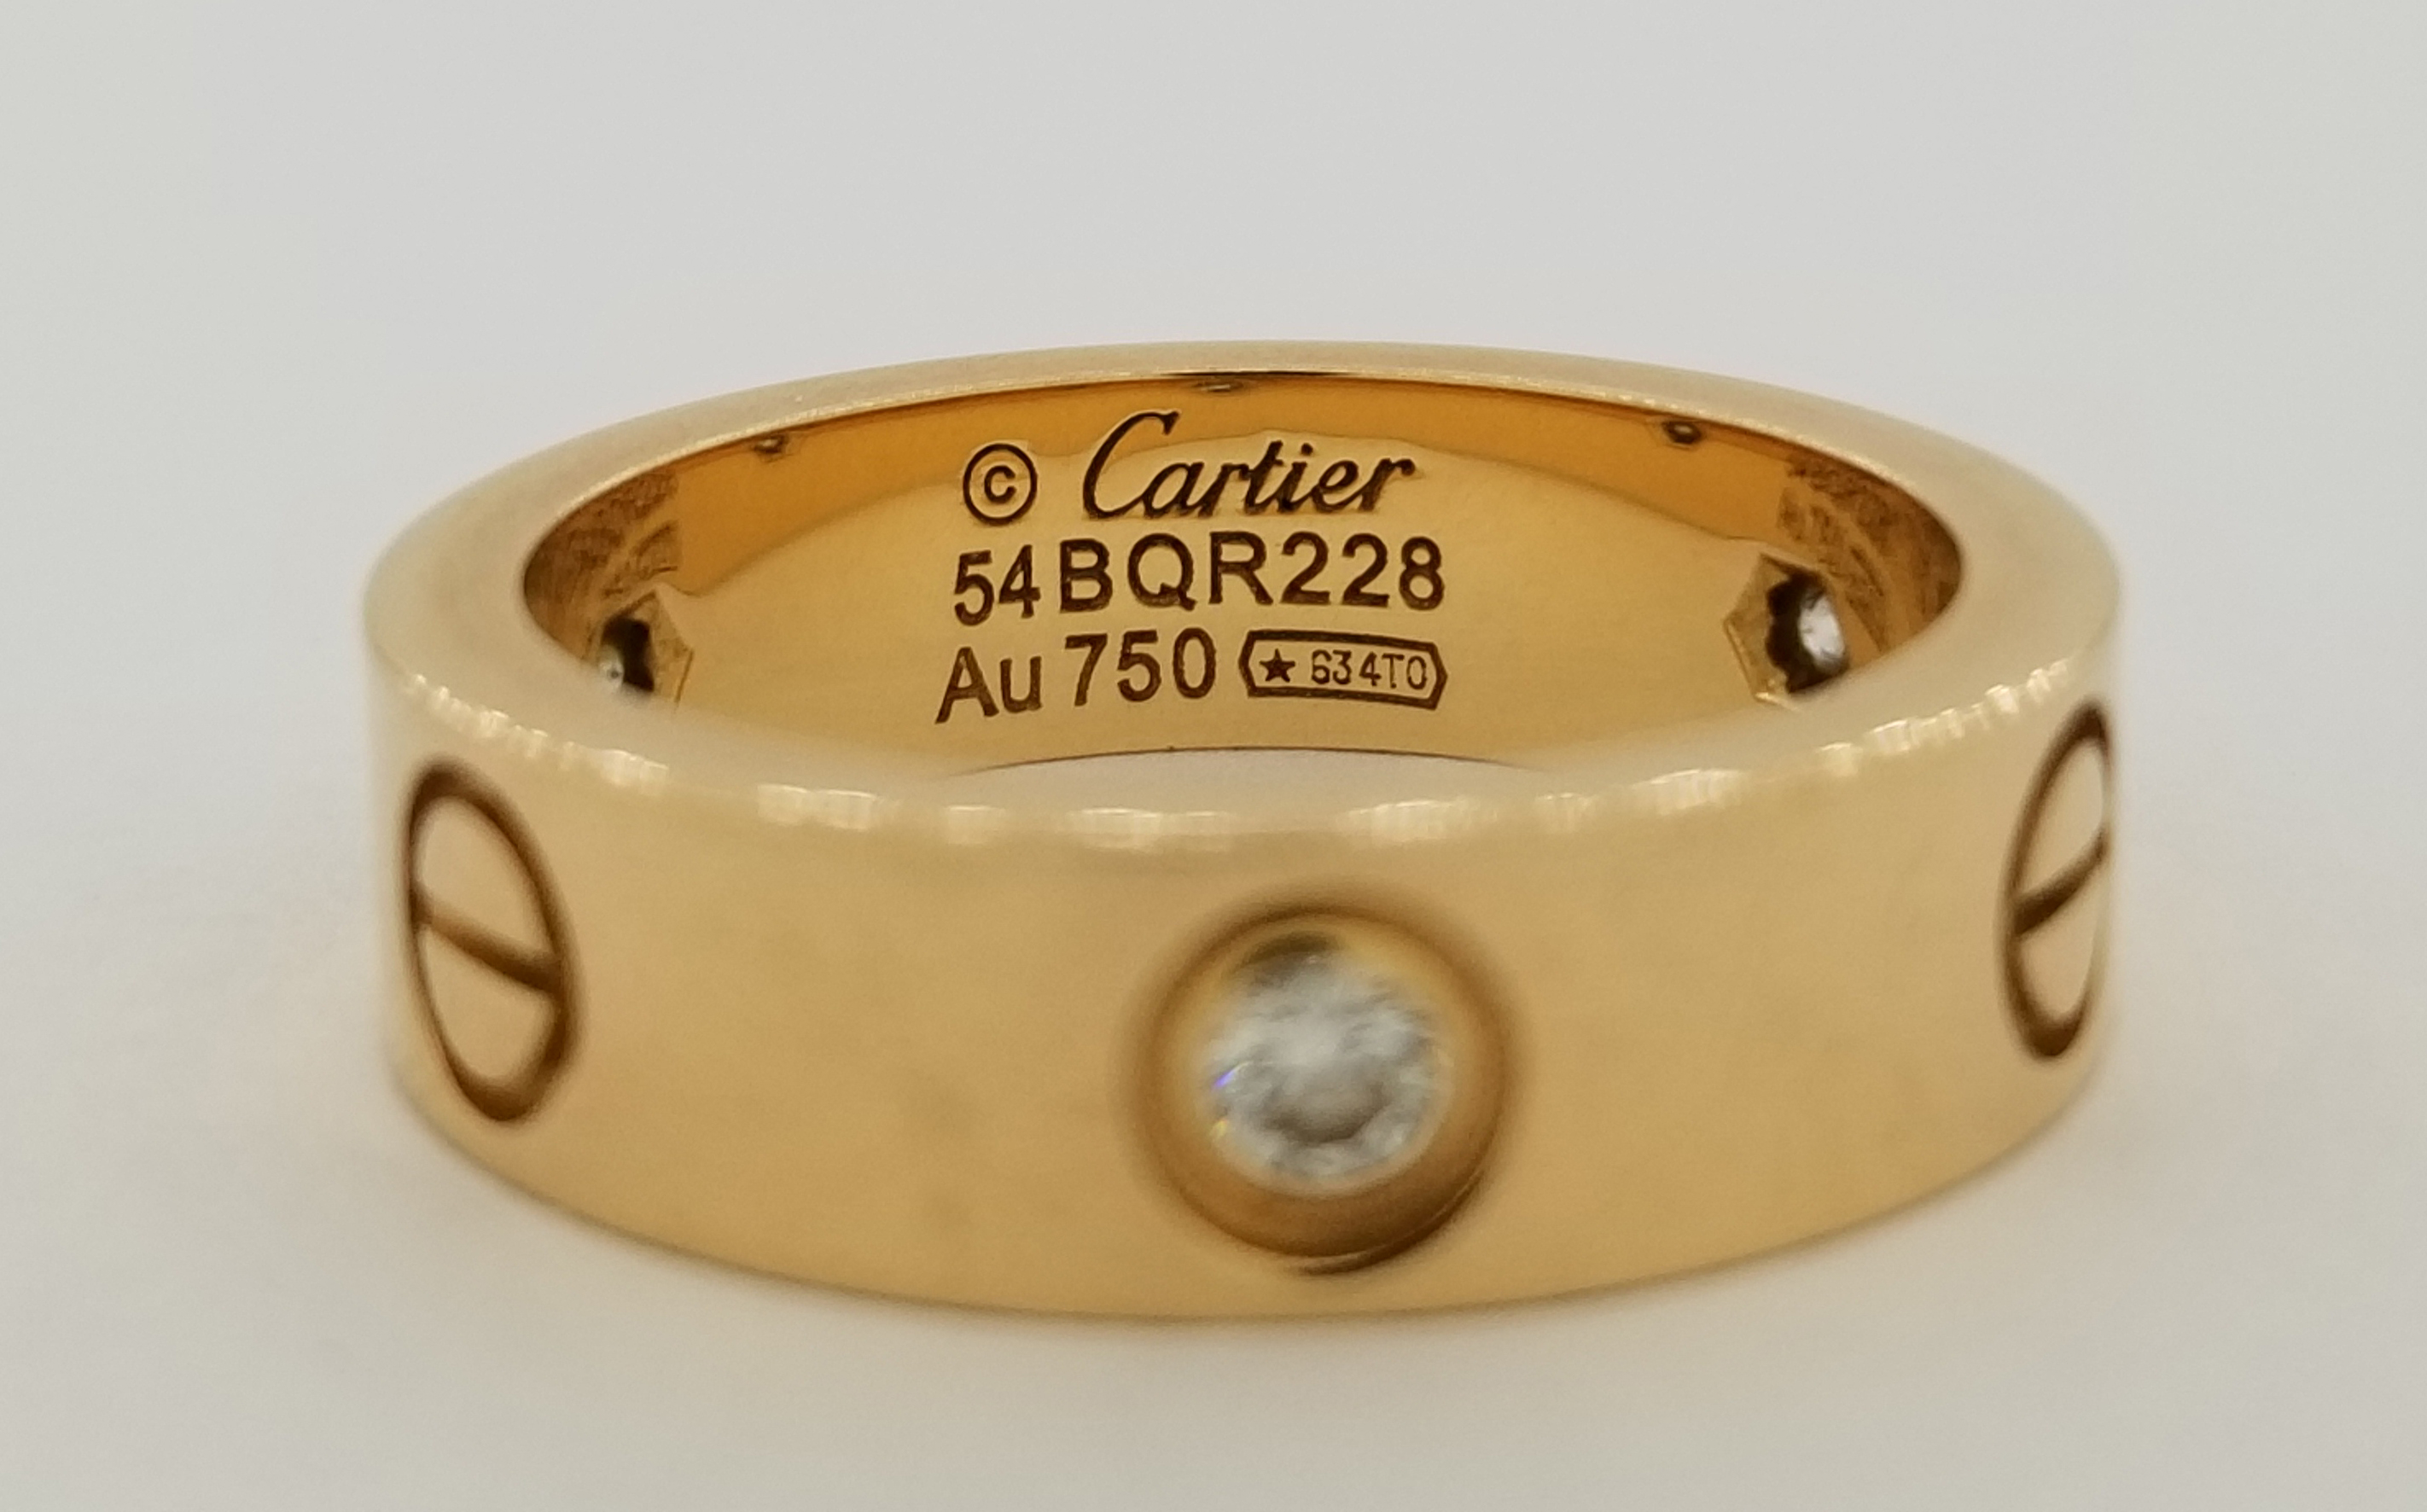 Cartier 18K Gold Diamond LOVE Ring - Image 5 of 5